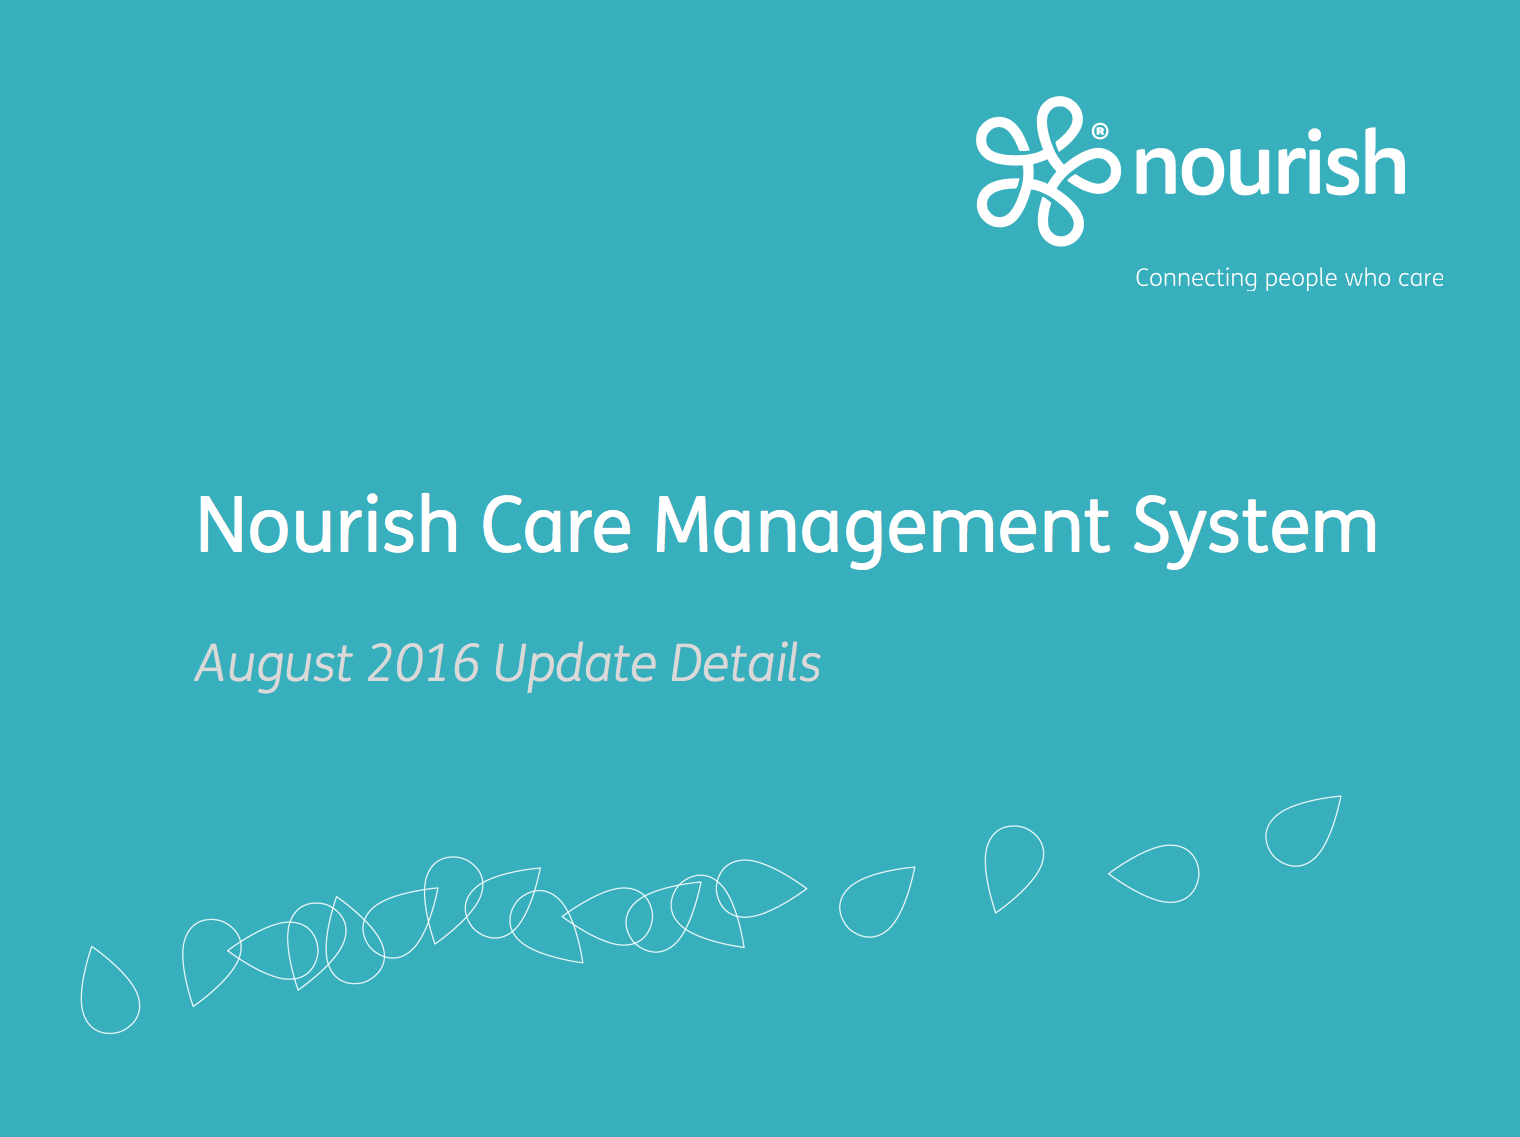 Nourish Care Management System Update August 2016